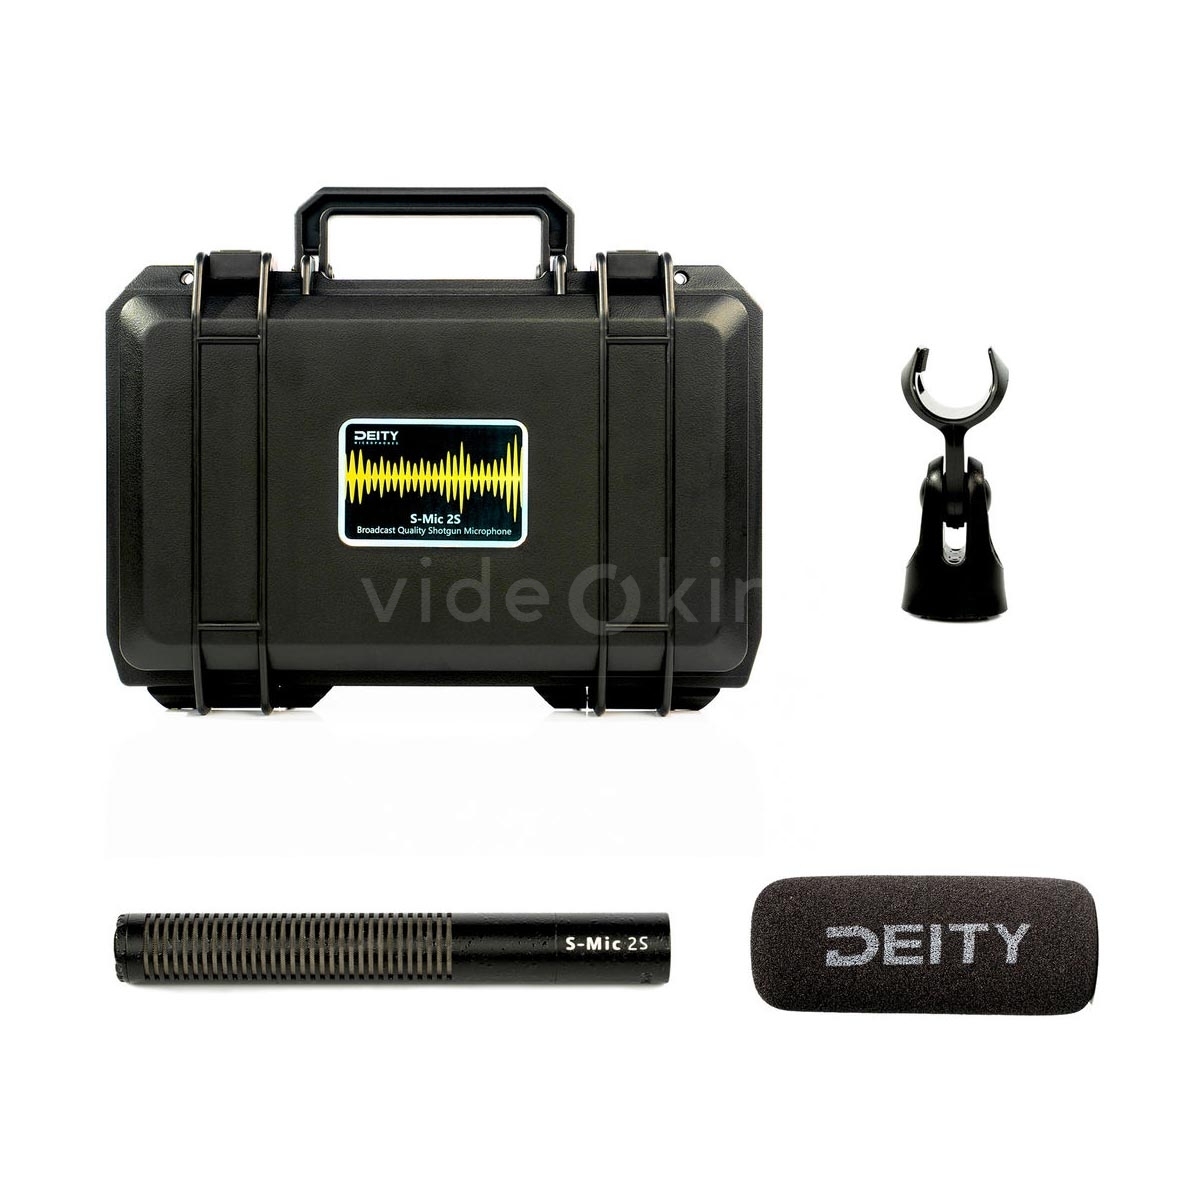 Deity S-Mic 2S Moisture-Resistant Short Shotgun Microphone